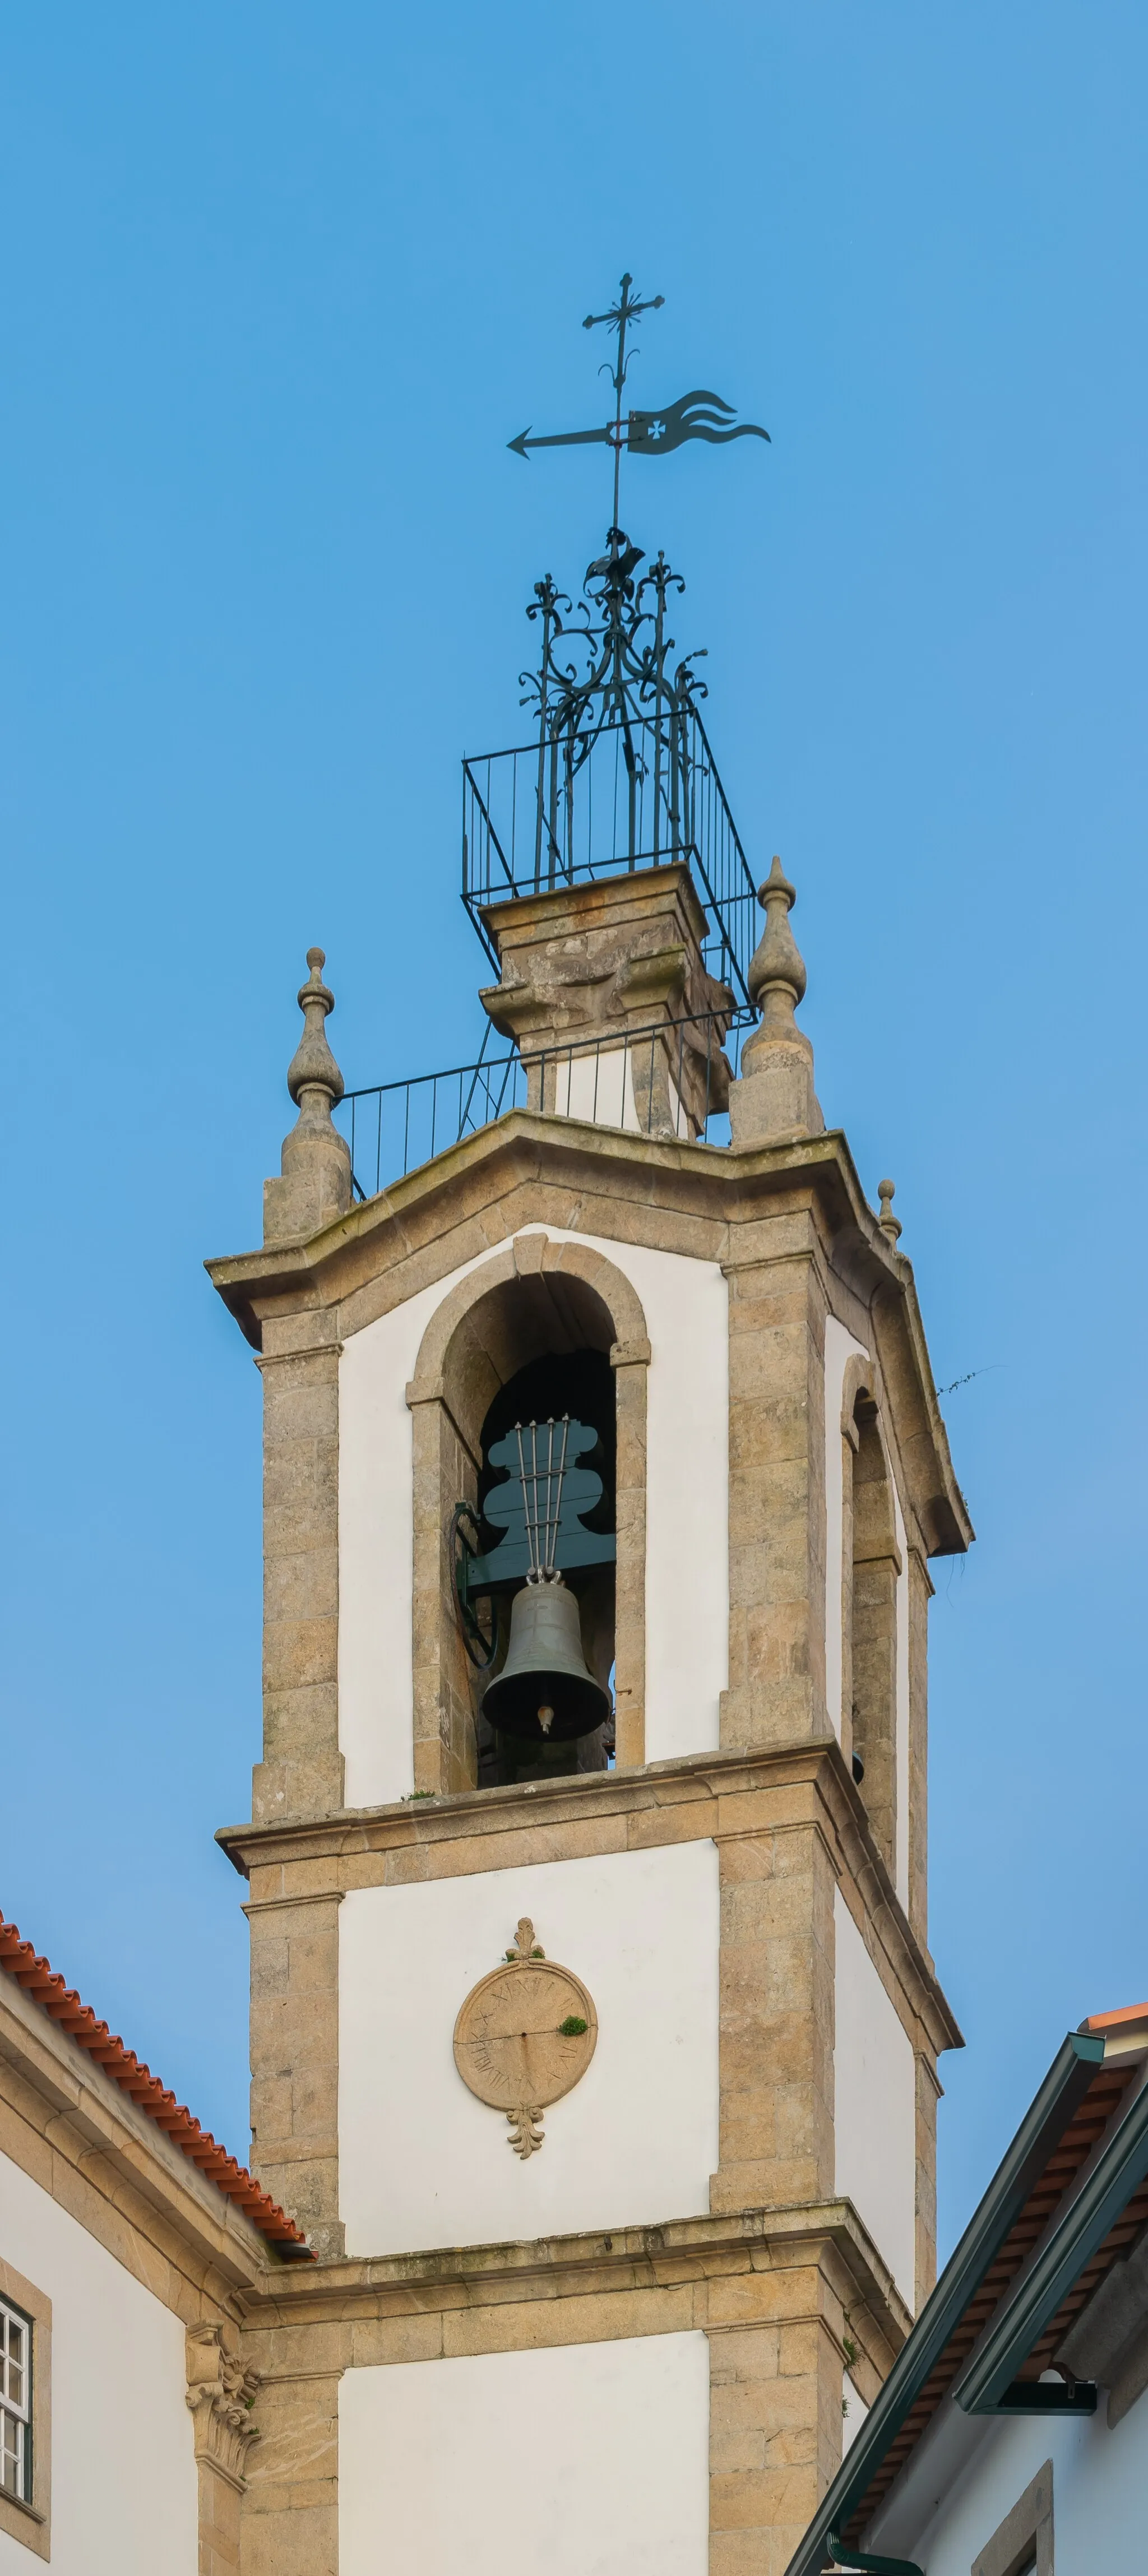 Photo showing: Bell tower of the Saint Stephen church in Valença do Minho, Viana do Castelo district, Portugal

This building is classified as Incluído em sítios classificados . It is indexed in the SIPA database (Sistema de Informação para o Património Arquitetónico) under the reference 6230.